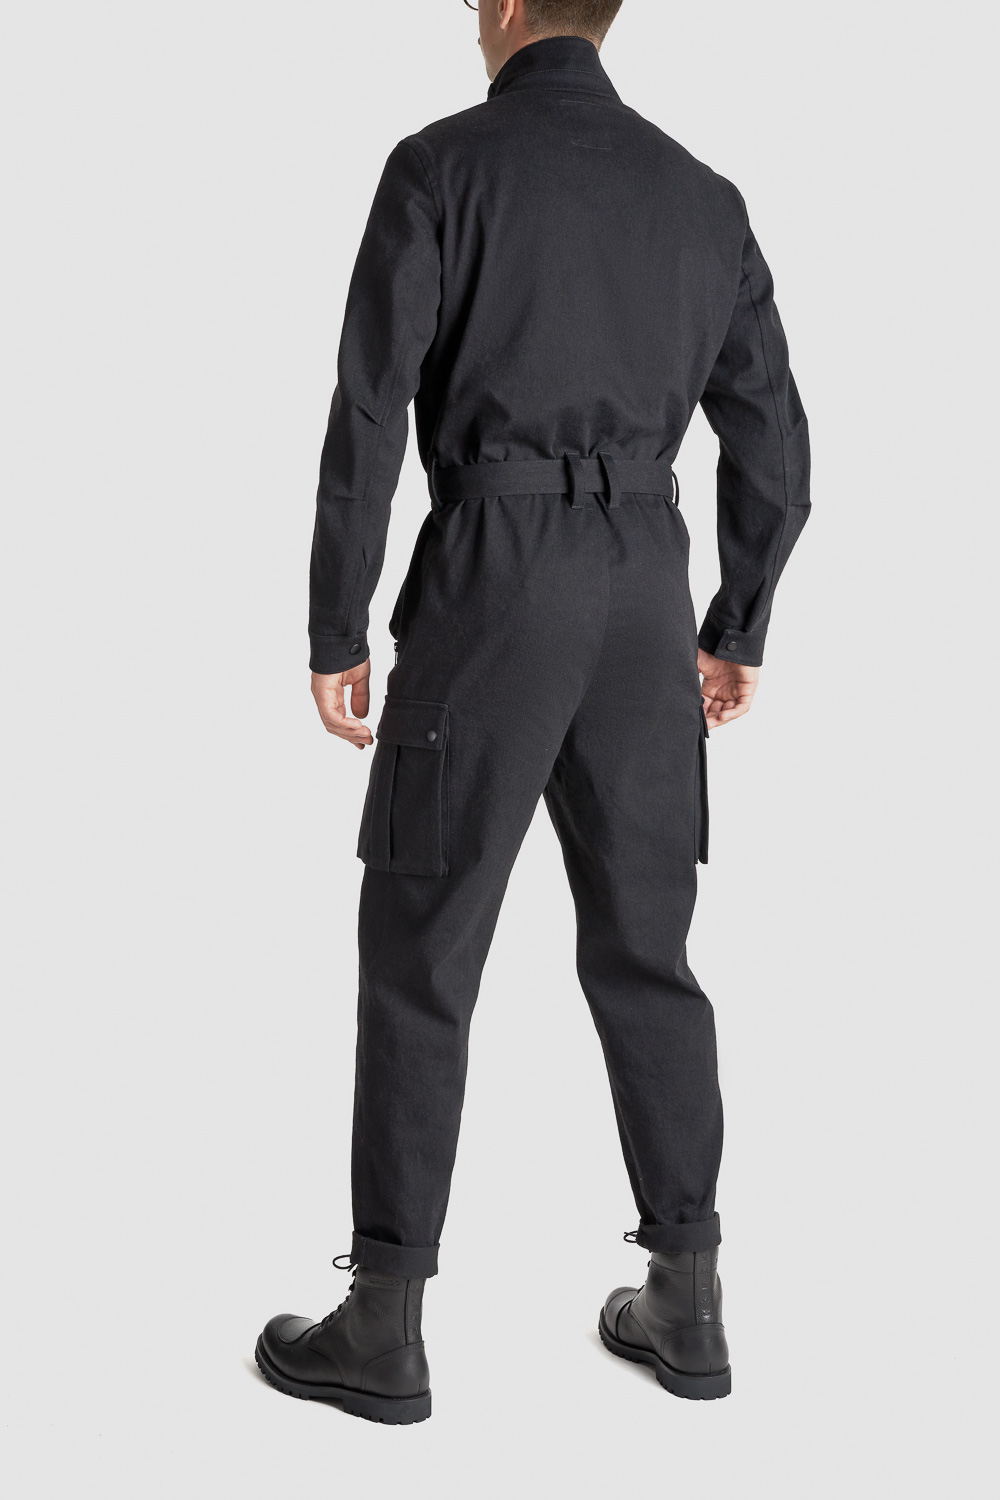 BRAT SUIT BLACK - One-Piece Overall Suit From Comfort-Stretch CORDURA® Denim 2